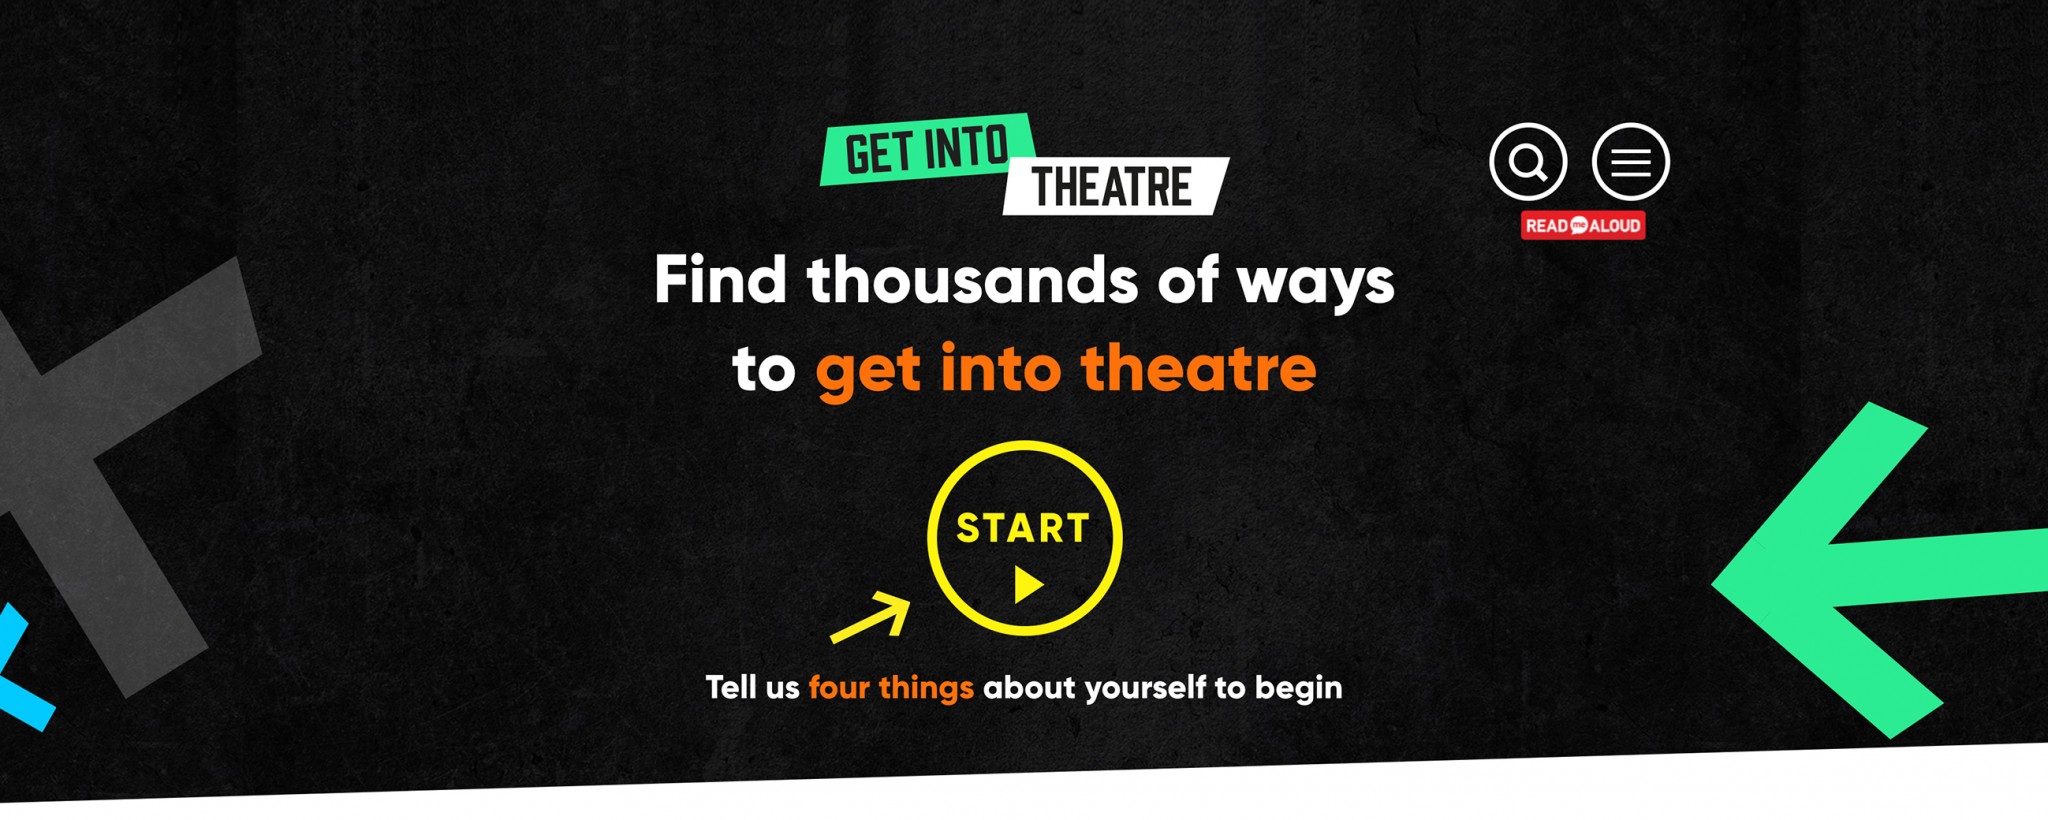 Get Into Theatre